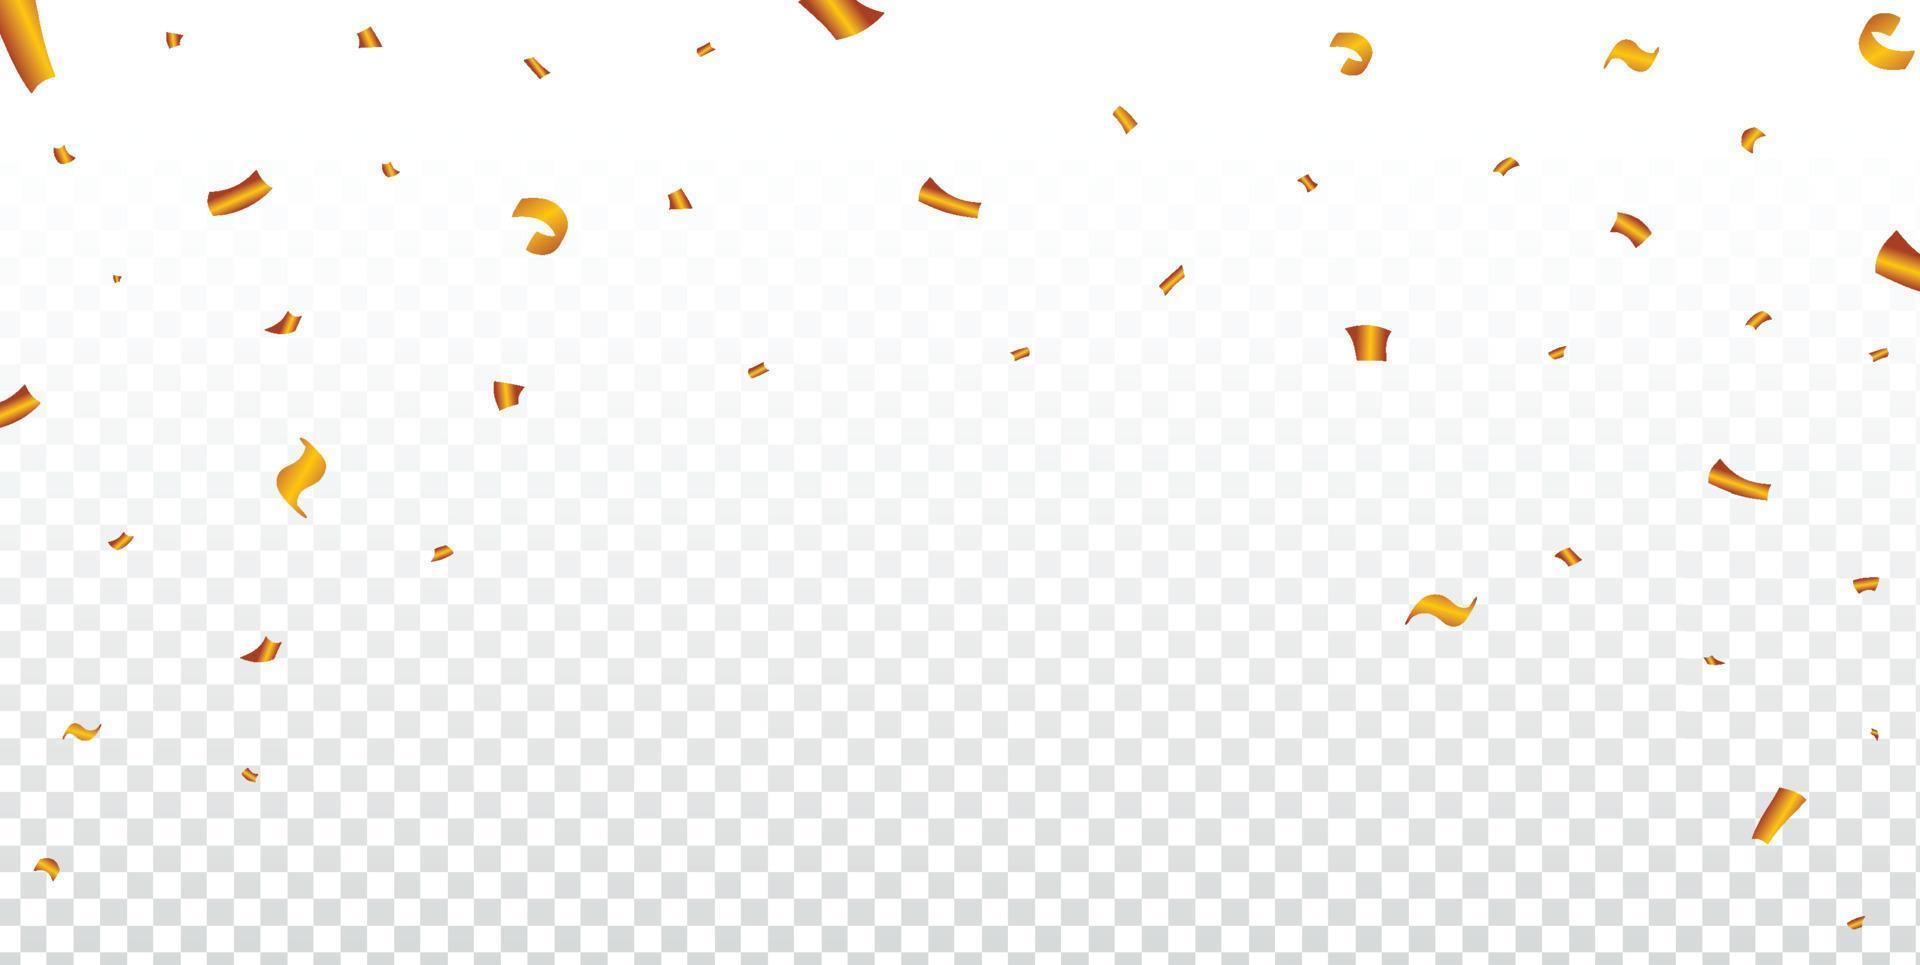 gyllene part glitter ram för en karneval bakgrund. gyllene konfetti fallande illustration på en transparent bakgrund. födelsedagsfirande element. festival och fest element konfetti illustration. vektor